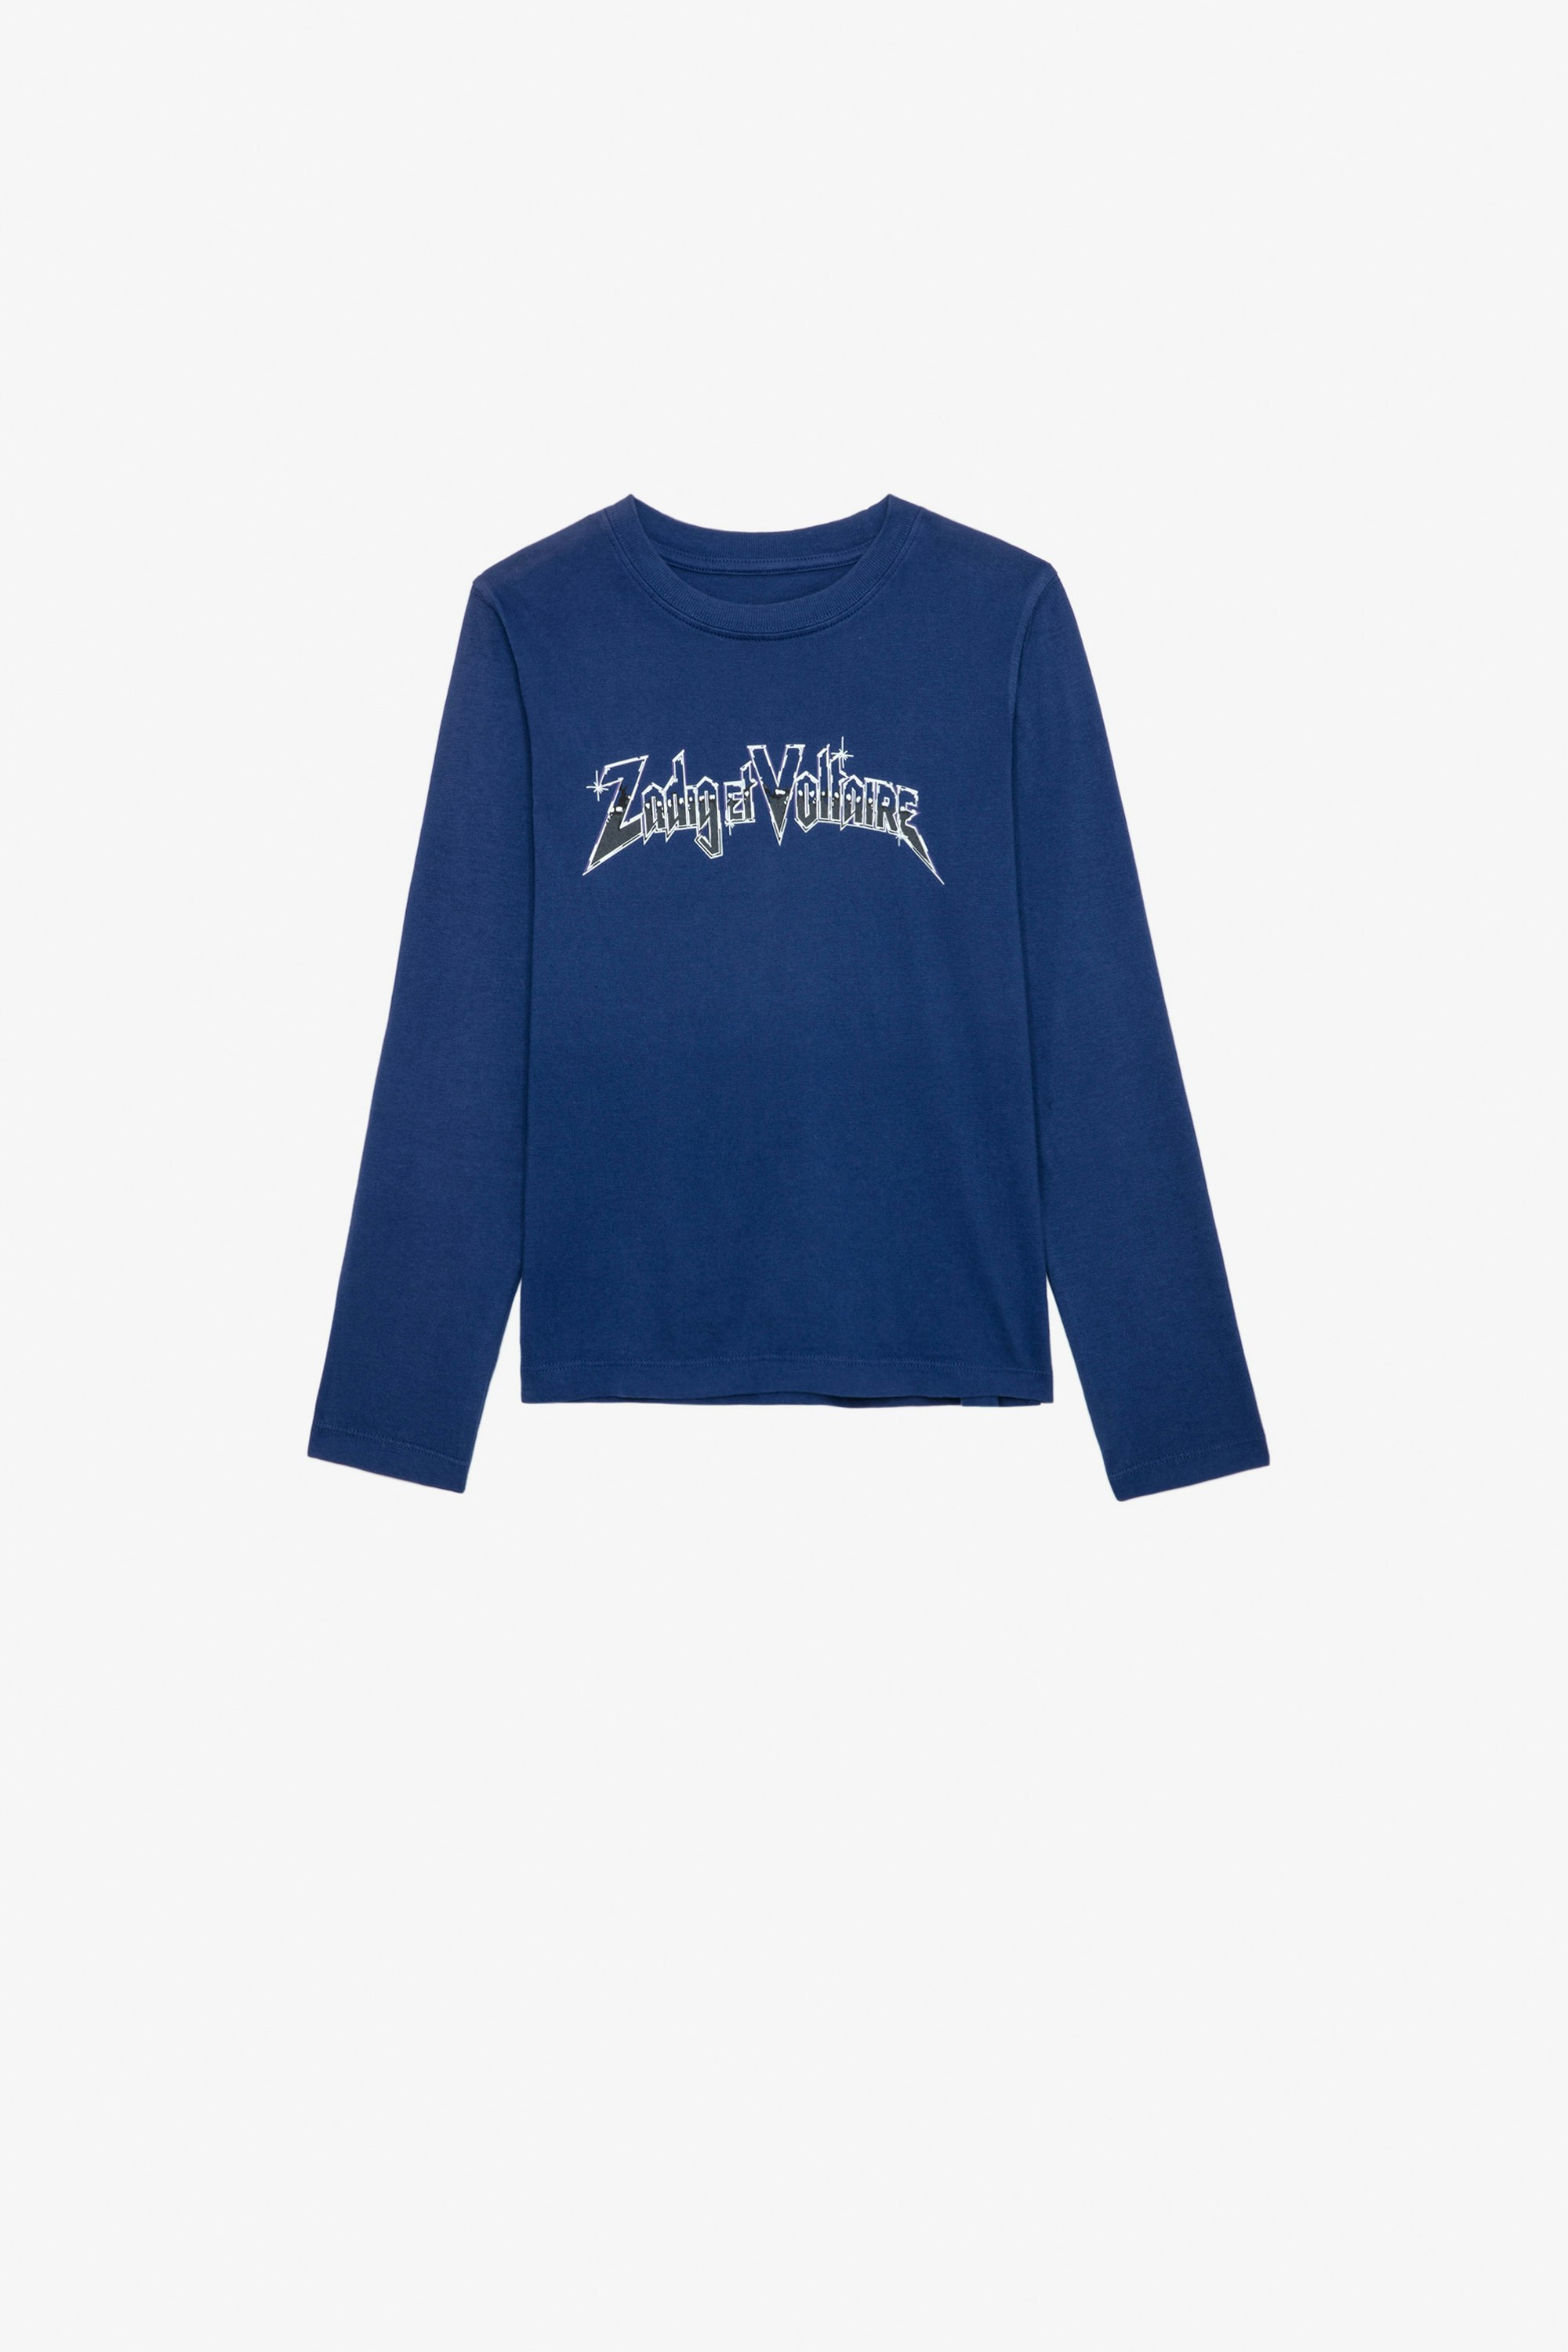 Kita Boys’ T-Shirt Boys’ blue long-sleeved cotton jersey T-shirt with prints.